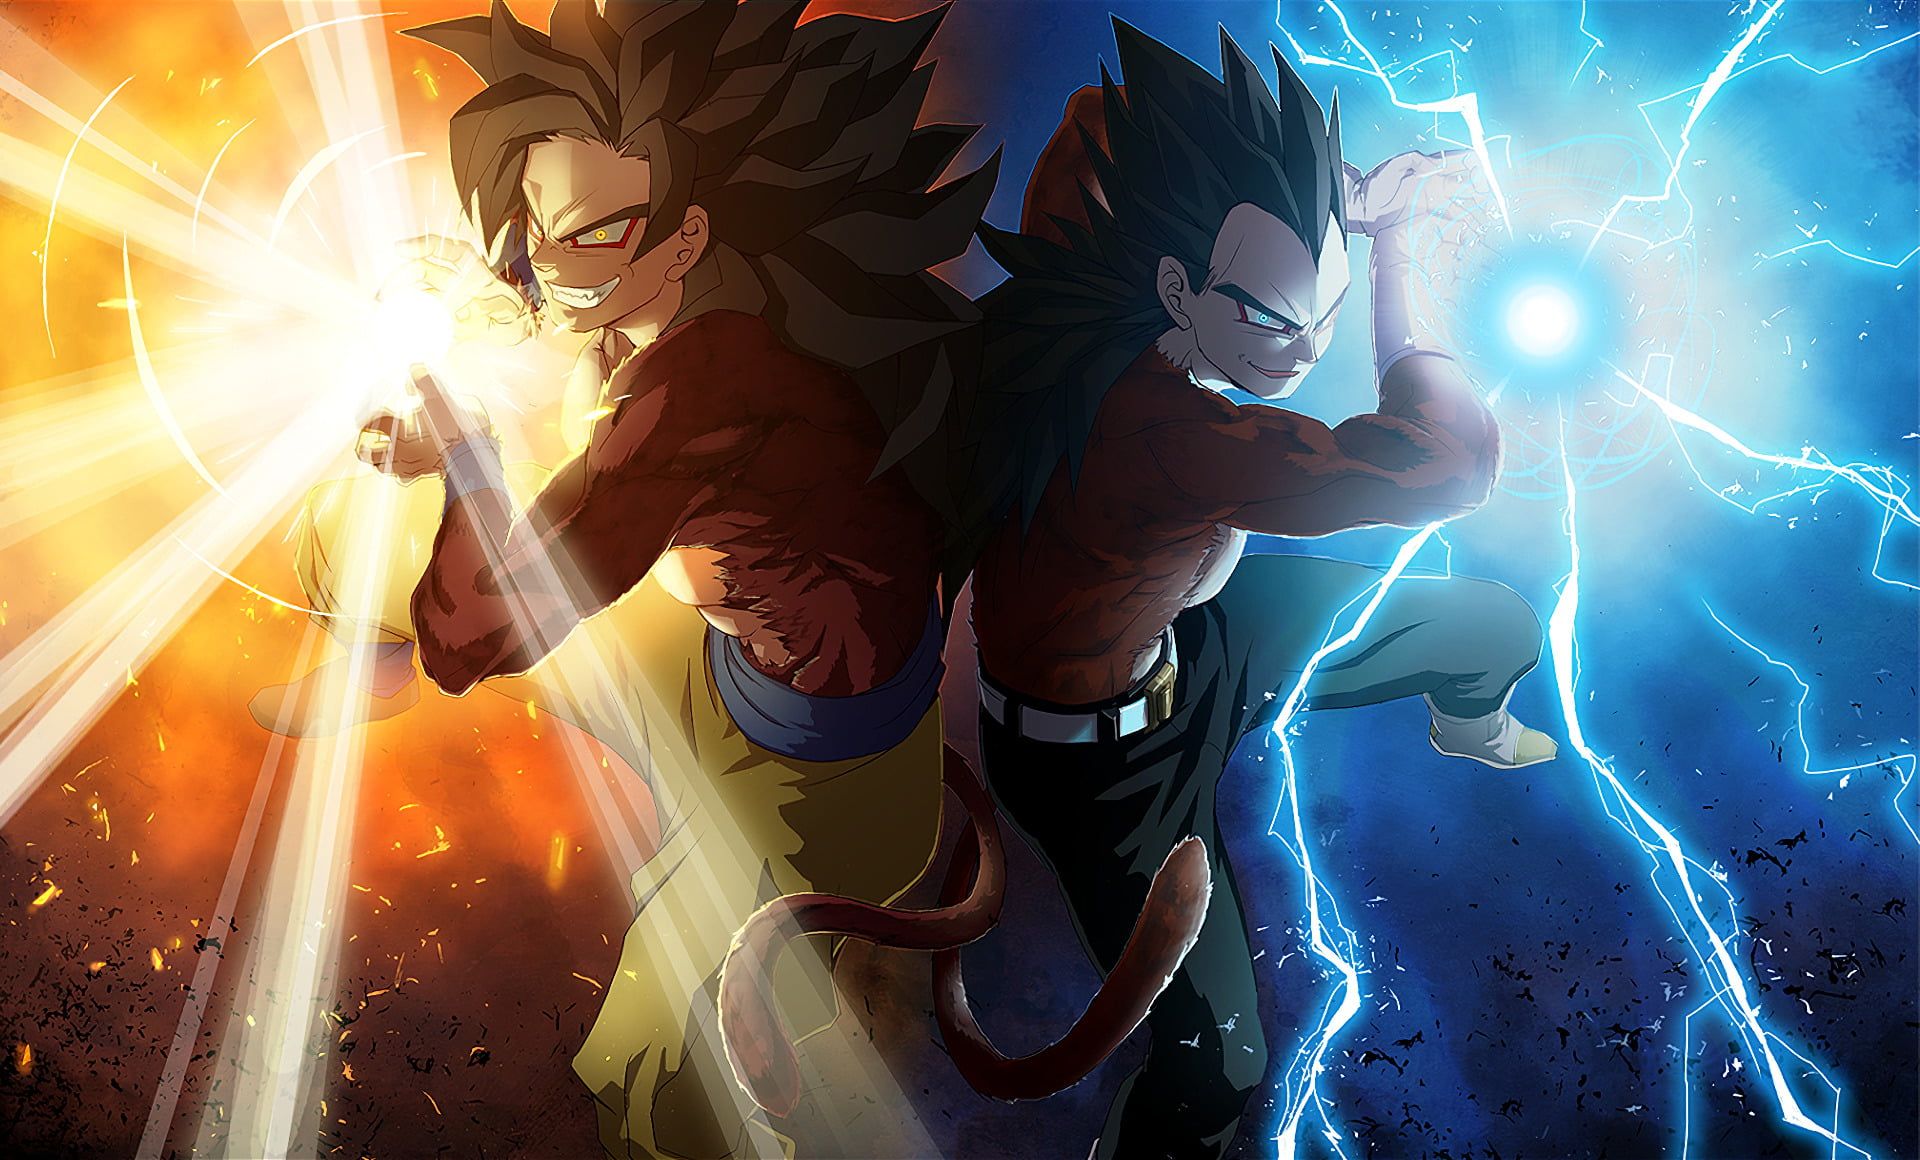 HD wallpaper: SSJ4 Goku and Vegeta illustration, Dragon Ball, Dragon Ball GT